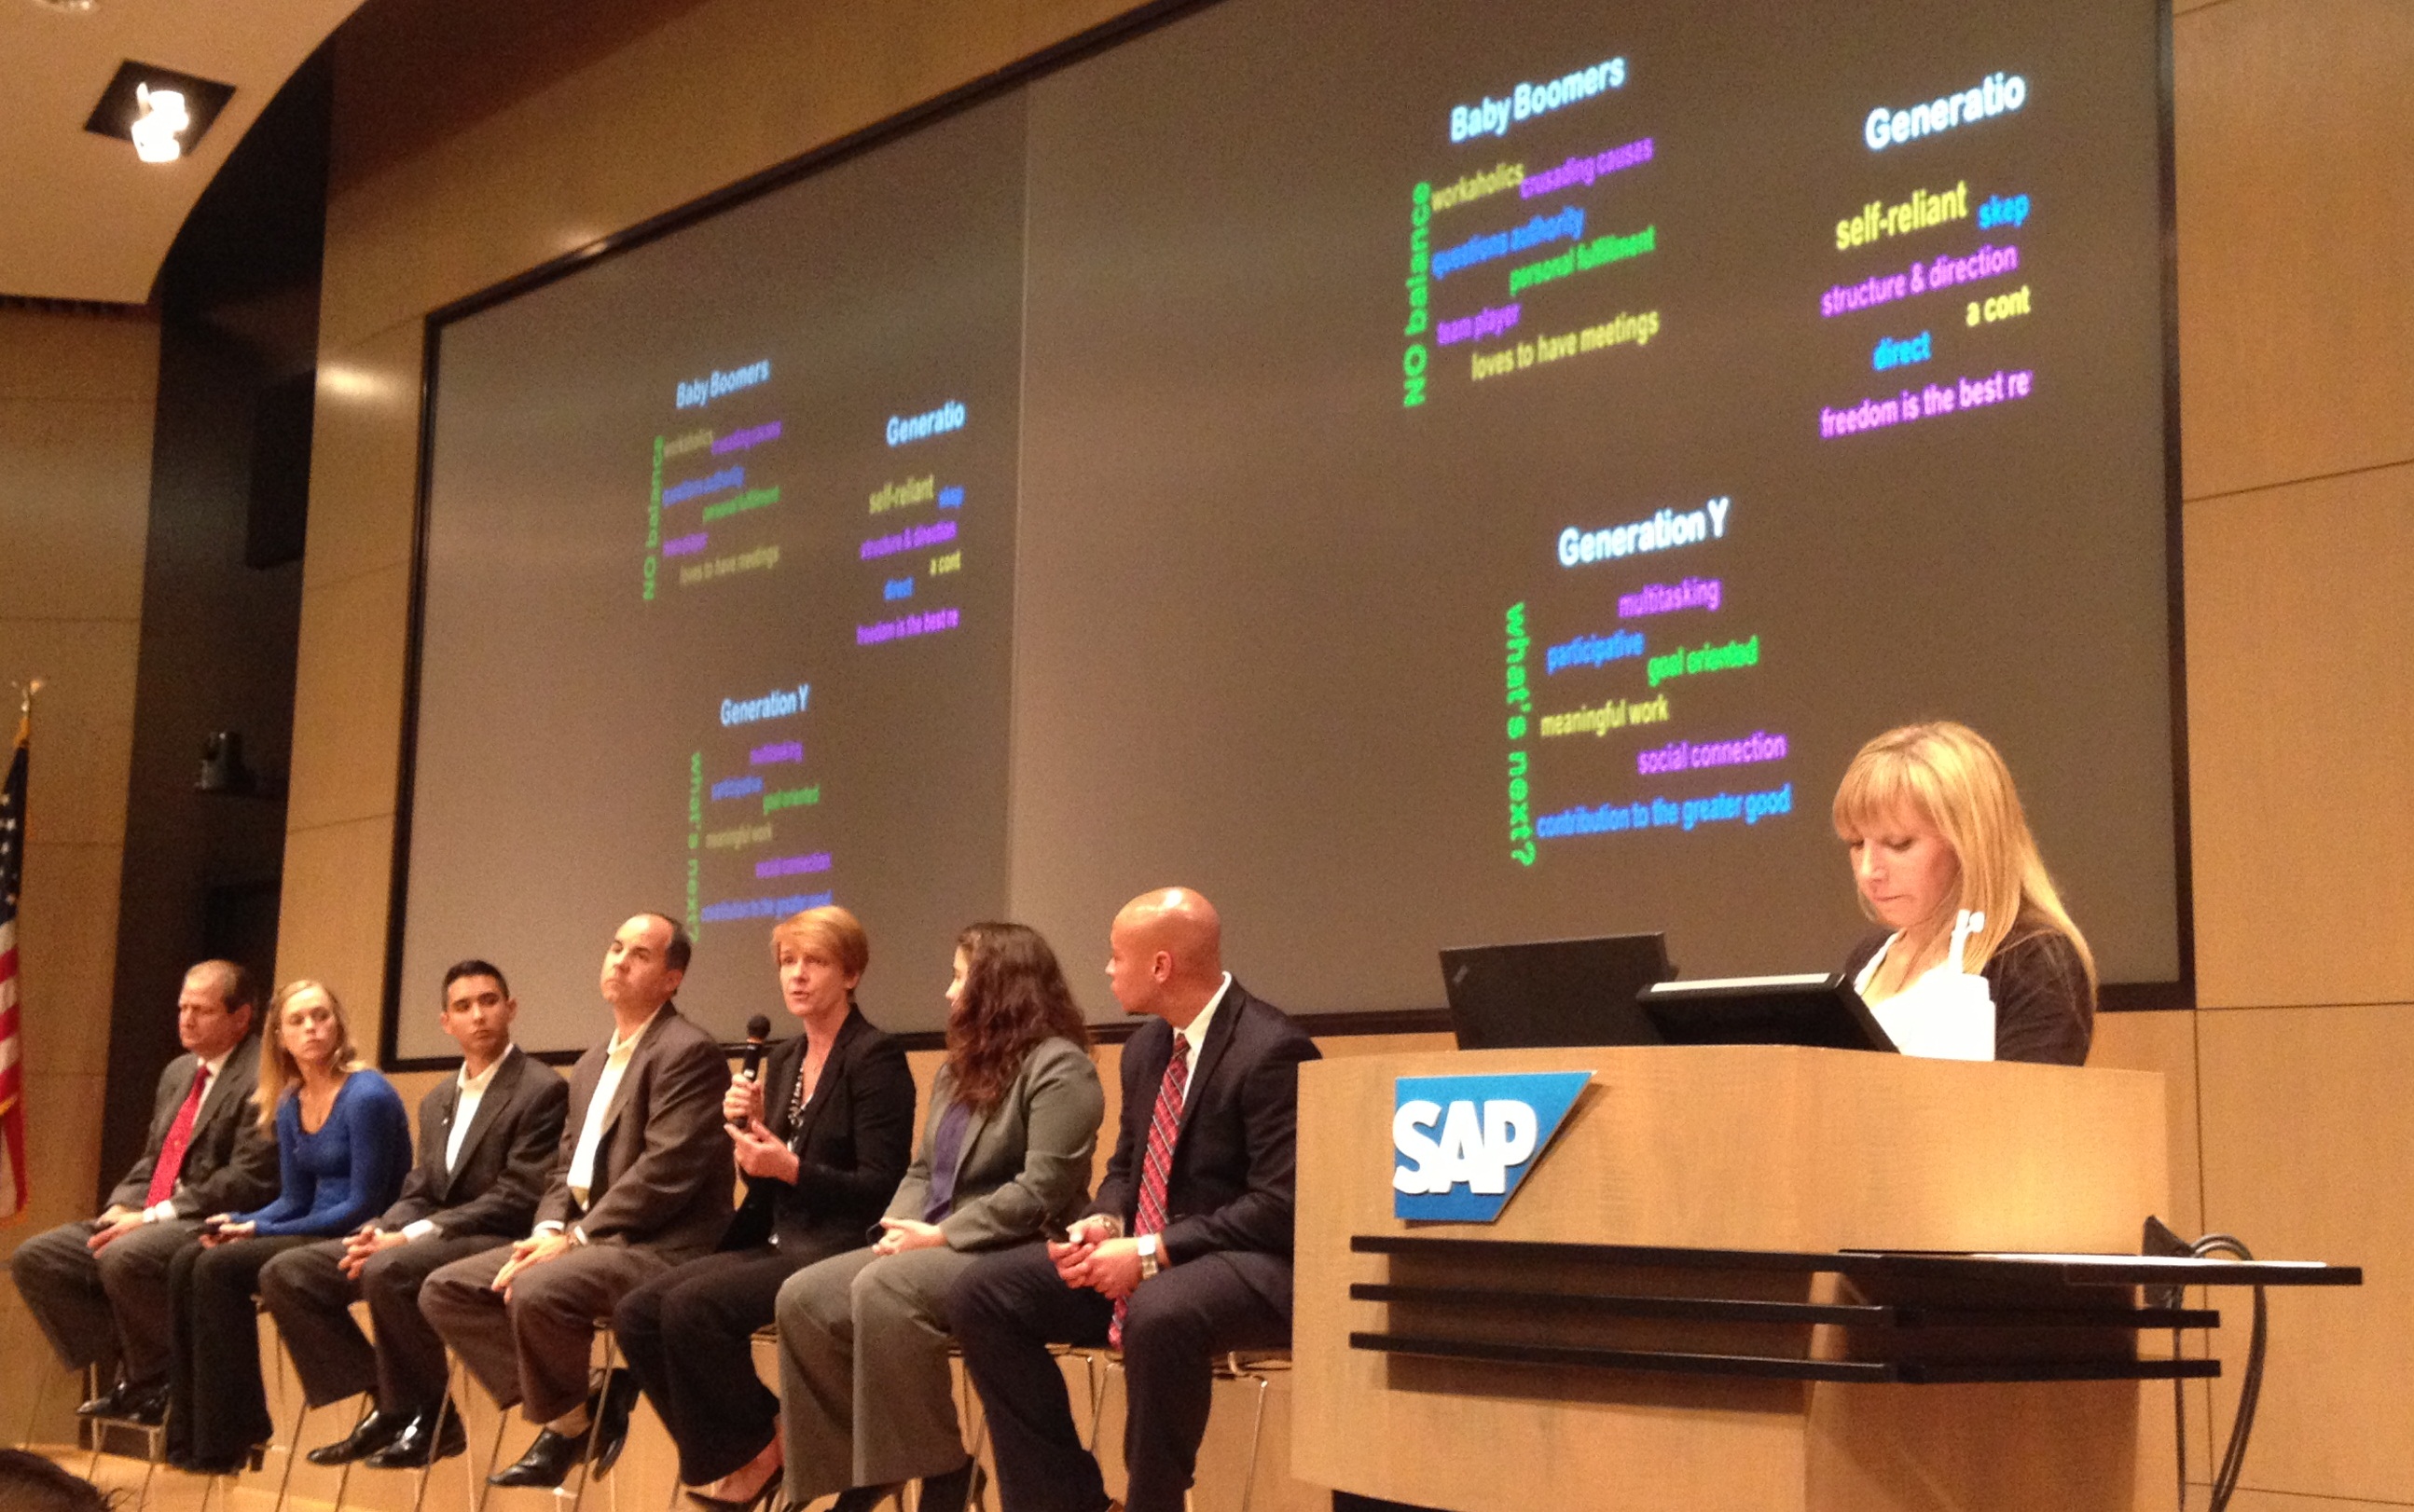 SAP multi-genertional panel discussion